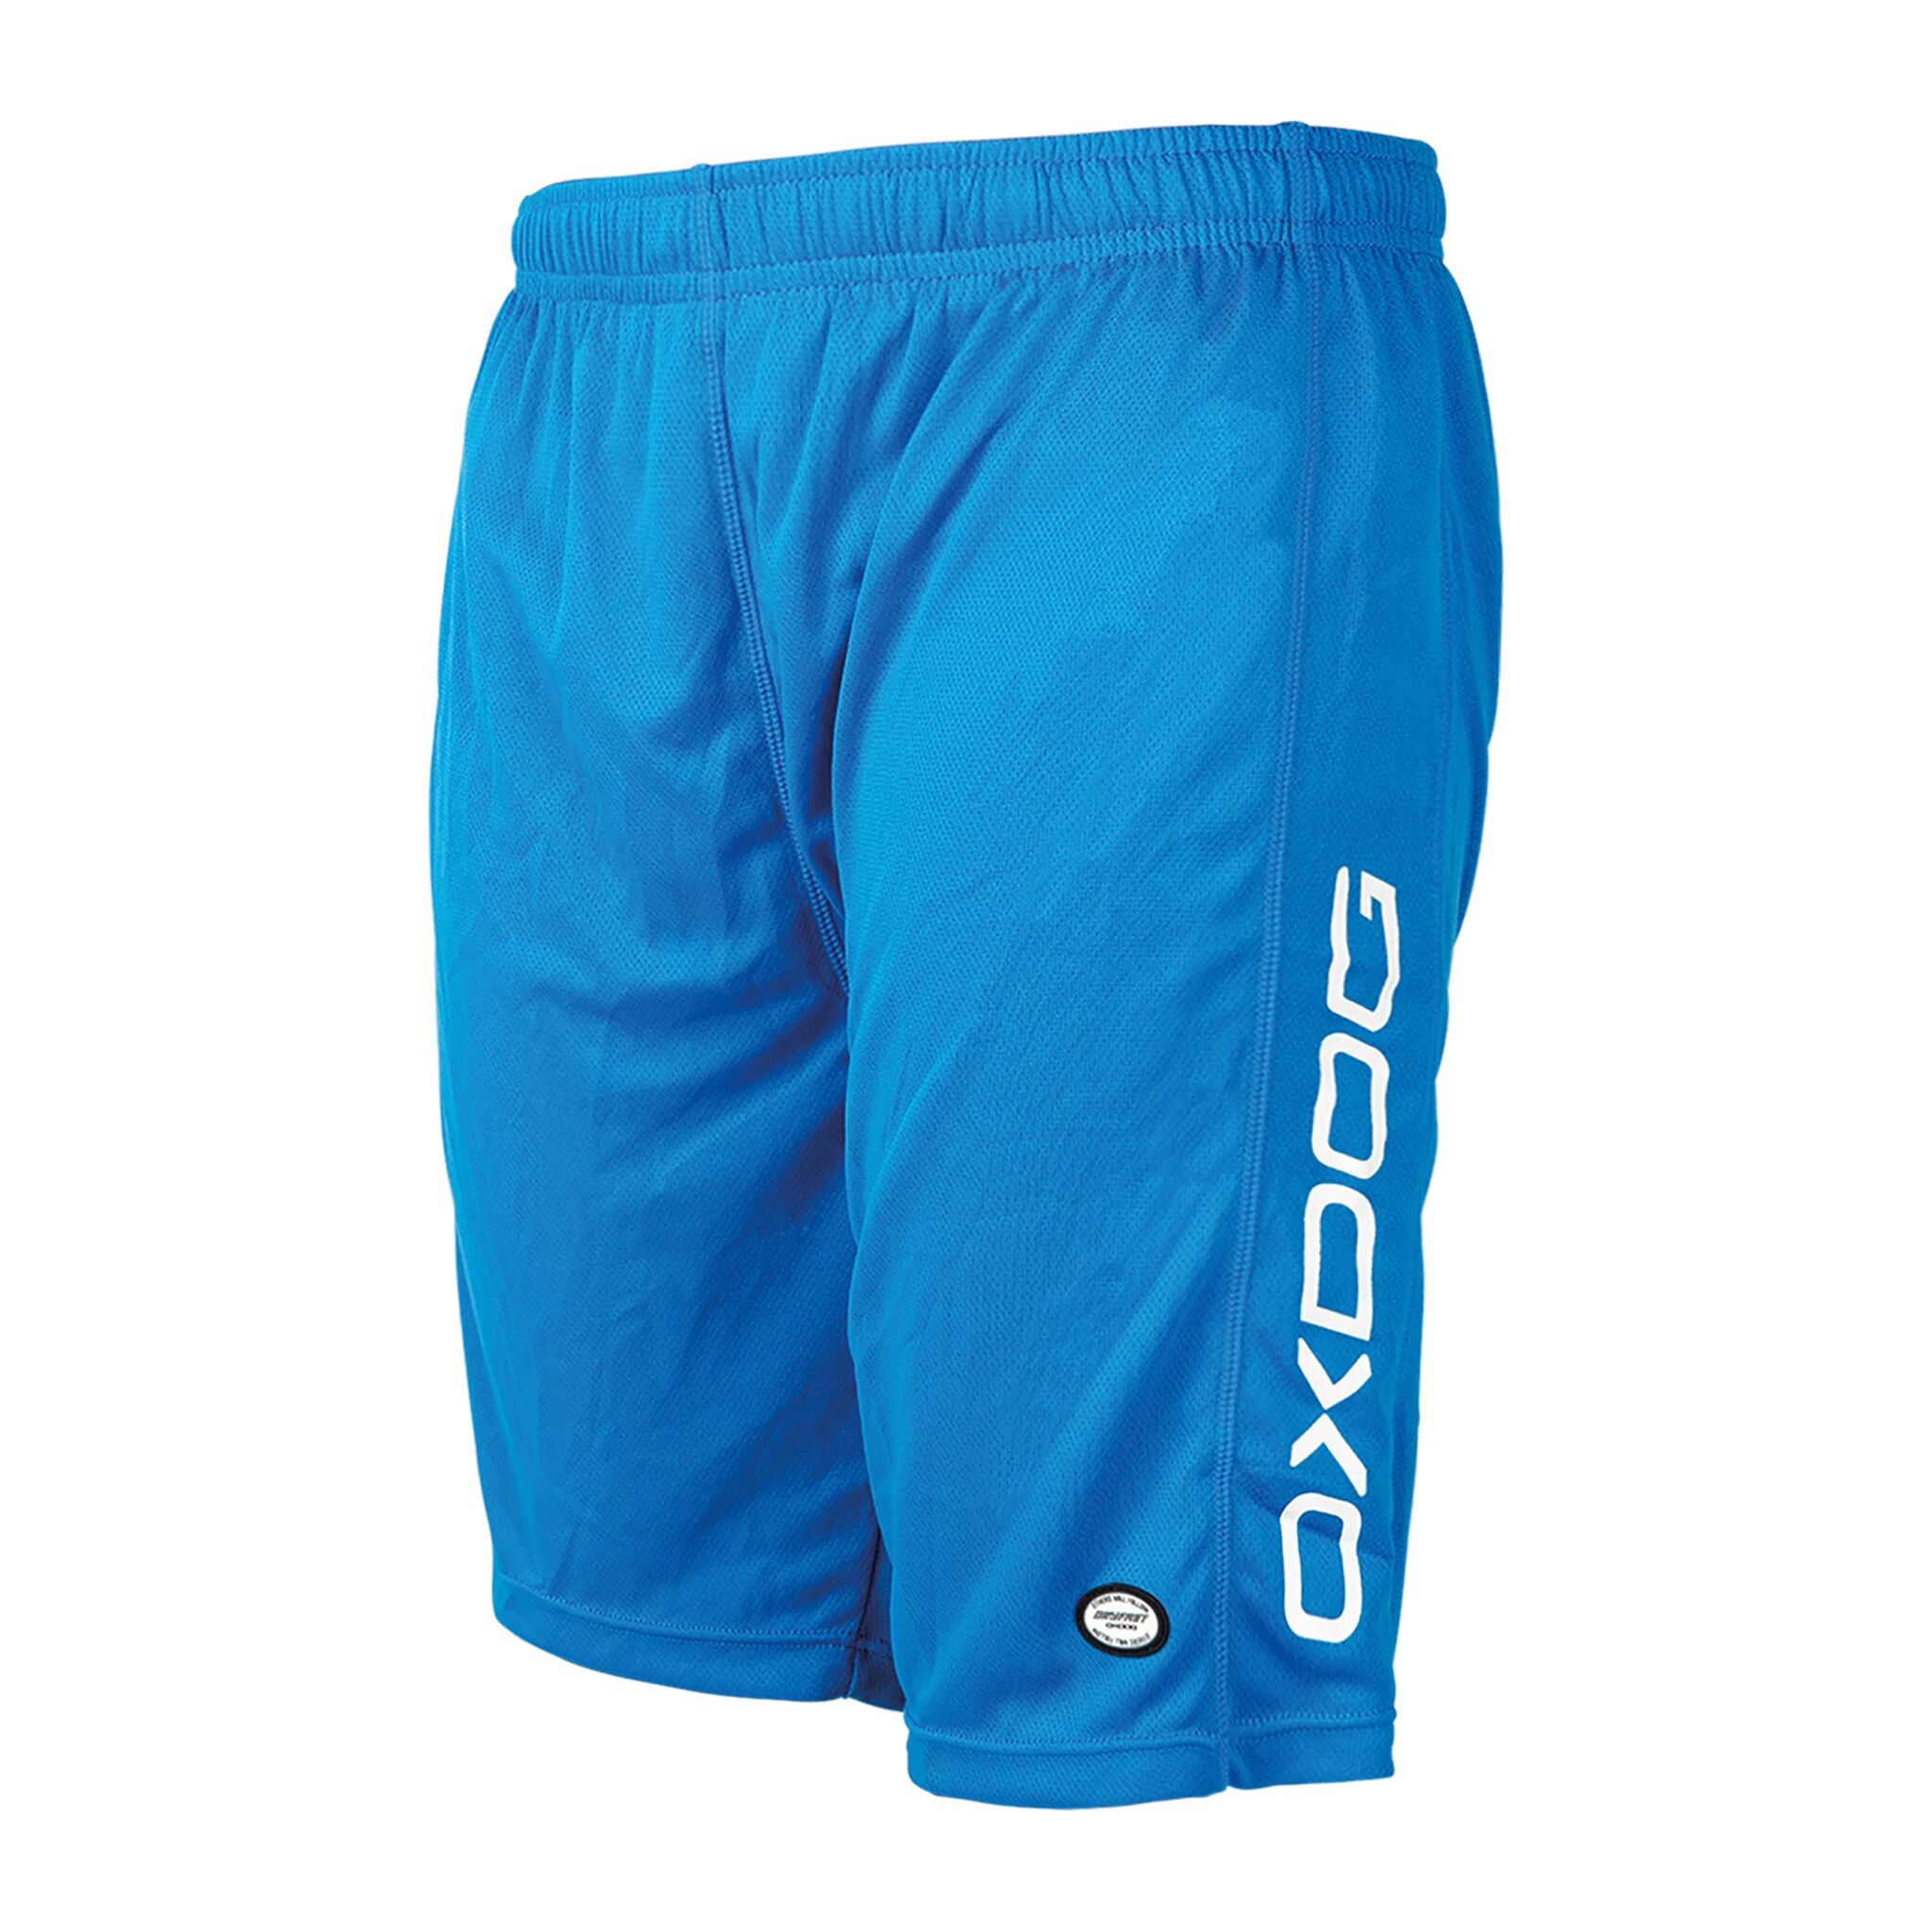 Oxdog 2021 AVALON SHORTS Sr, shorts senior XL ROYAL BLUE